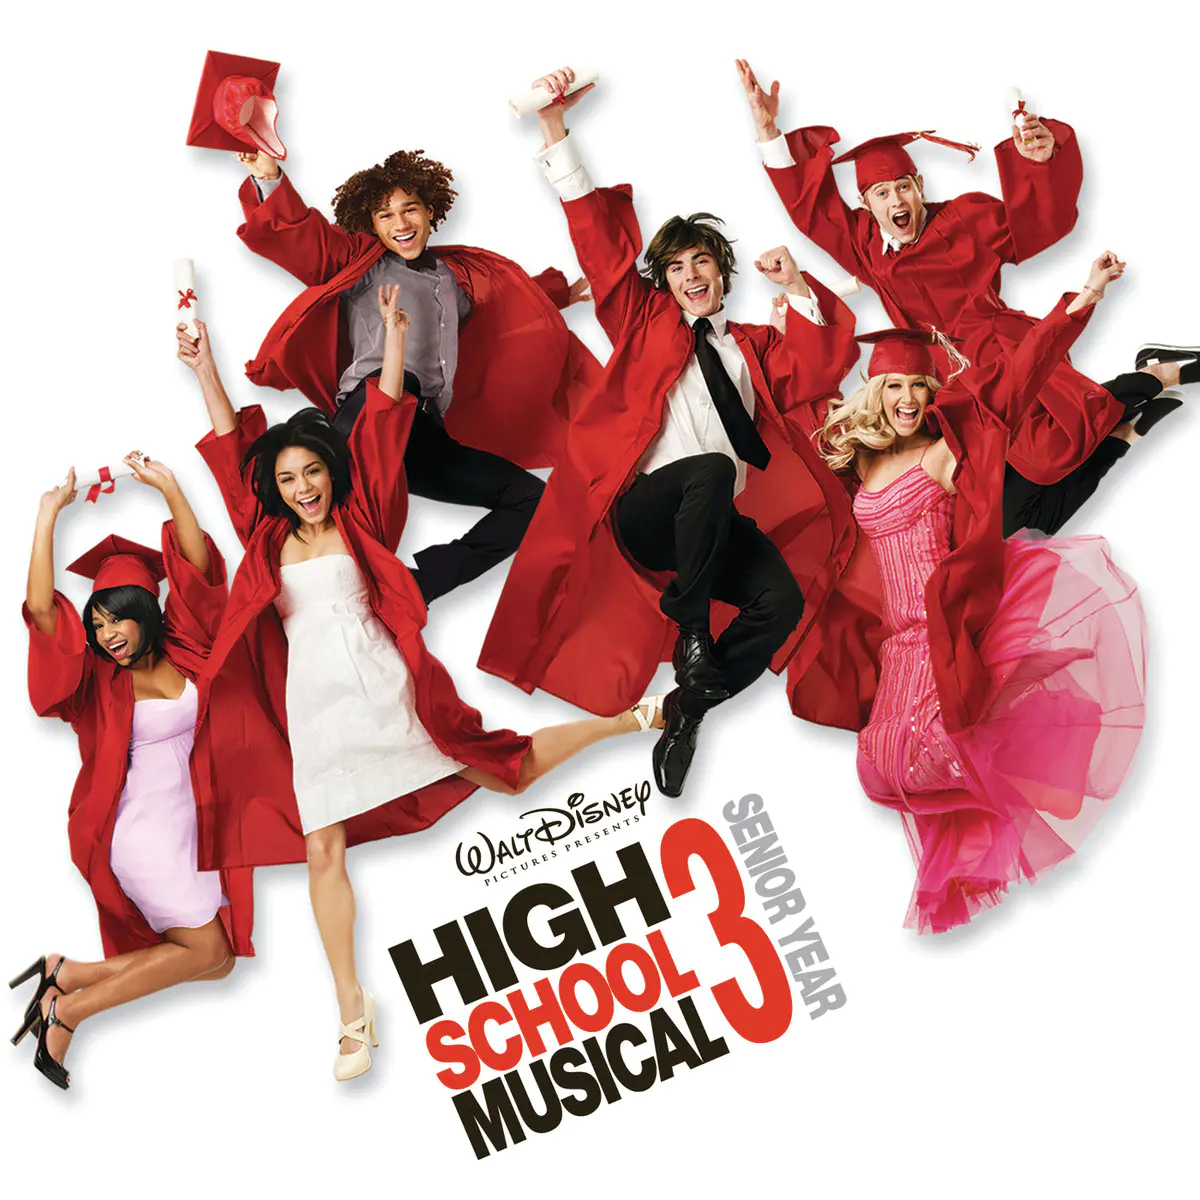 Now Or Never Lyrics In English High School Musical 3 Senior Year Now Or Never Song Lyrics In English Free Online On Gaana Com